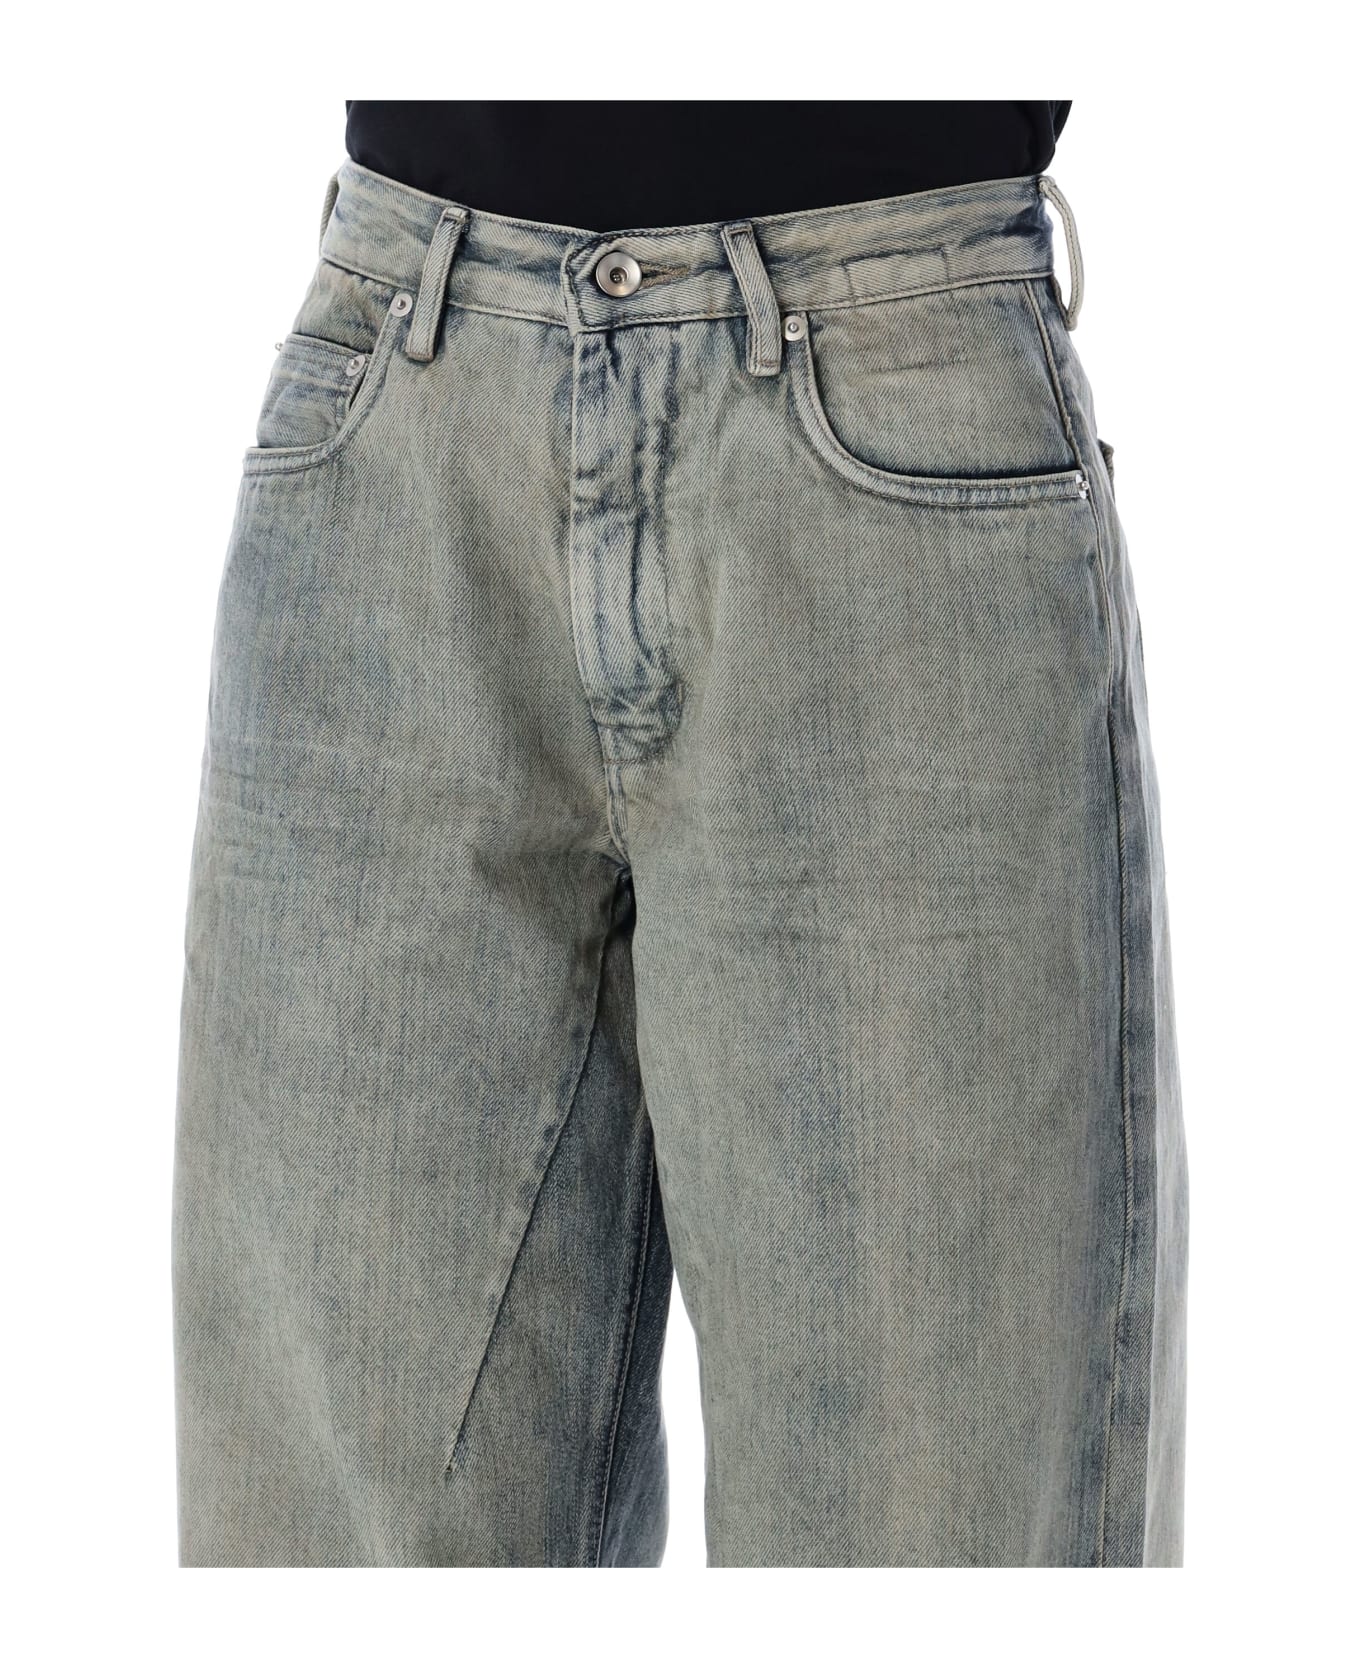 DRKSHDW Geth Jeans - SKY